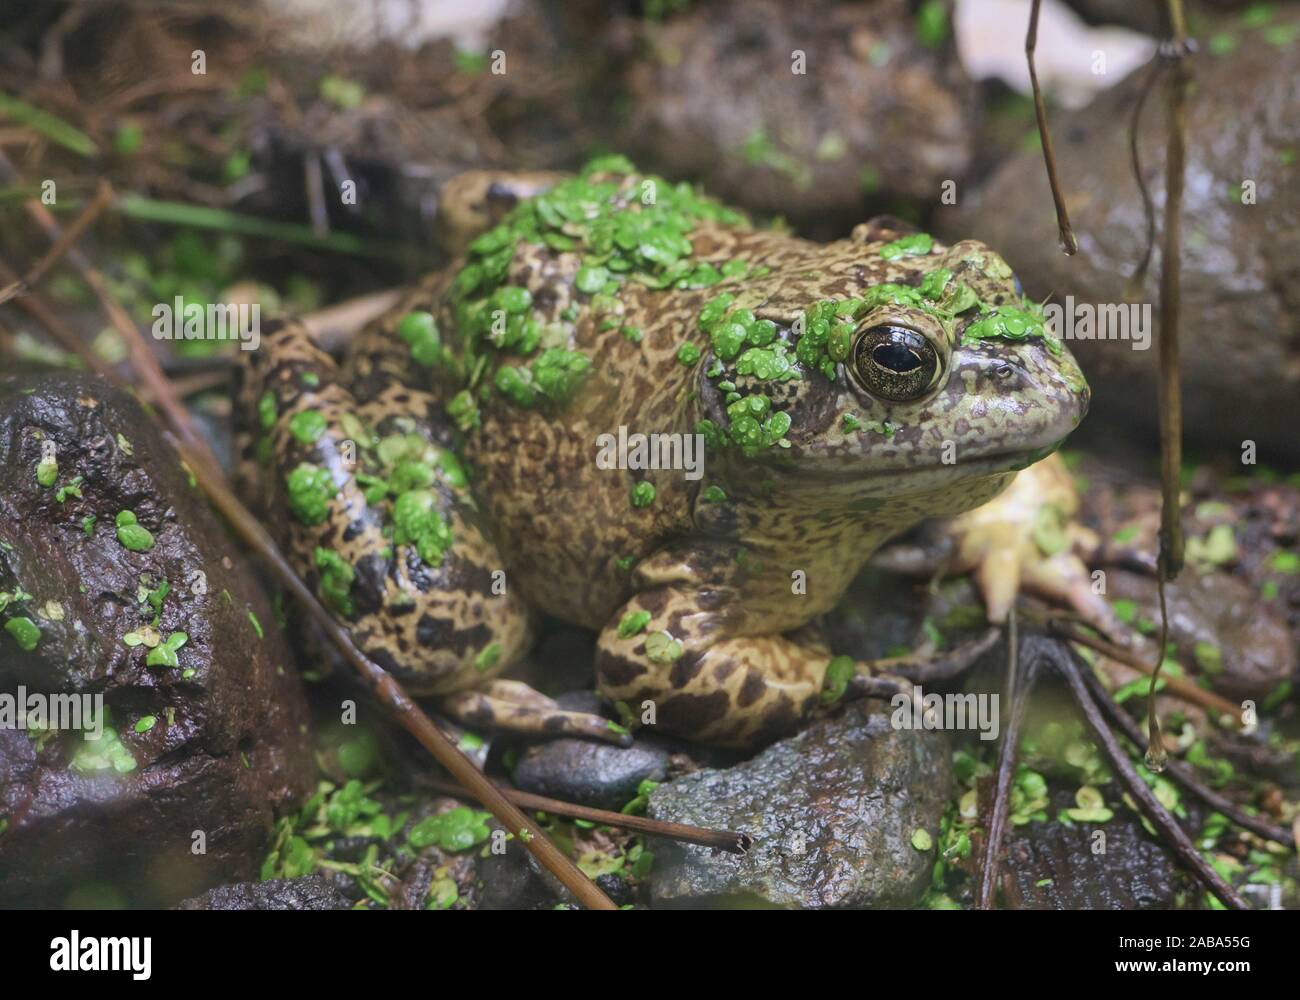 American bullfrog (Lithobates catesbeianus), Amaru Biopark, Cuenca, Ecuador. Stock Photo